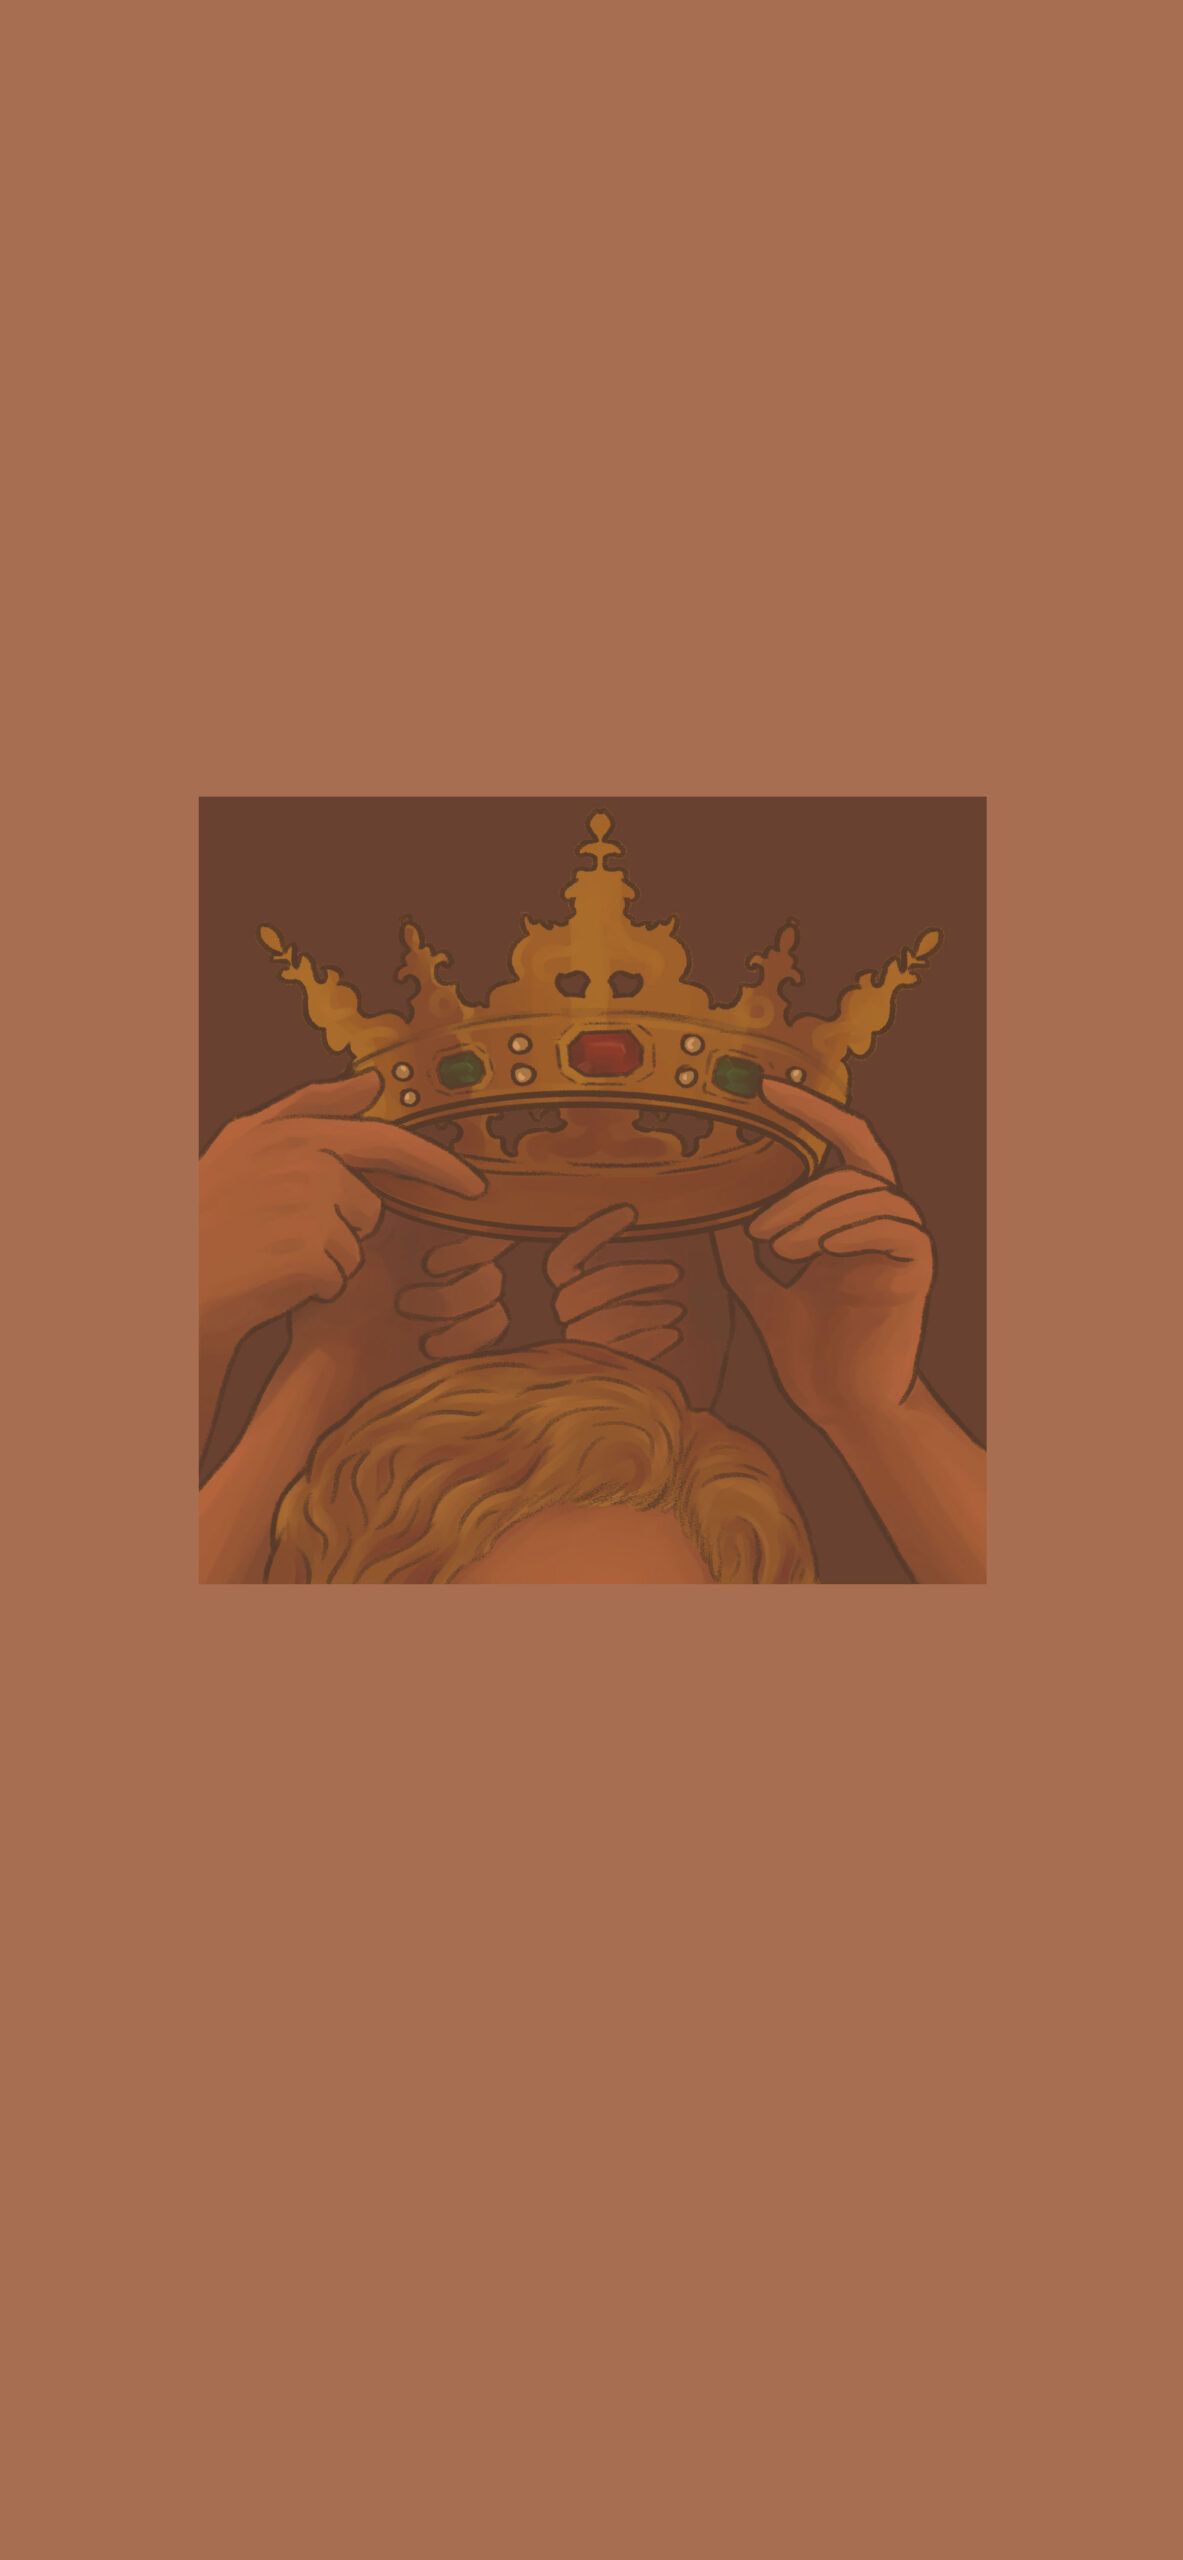 coronation aesthetic brown background